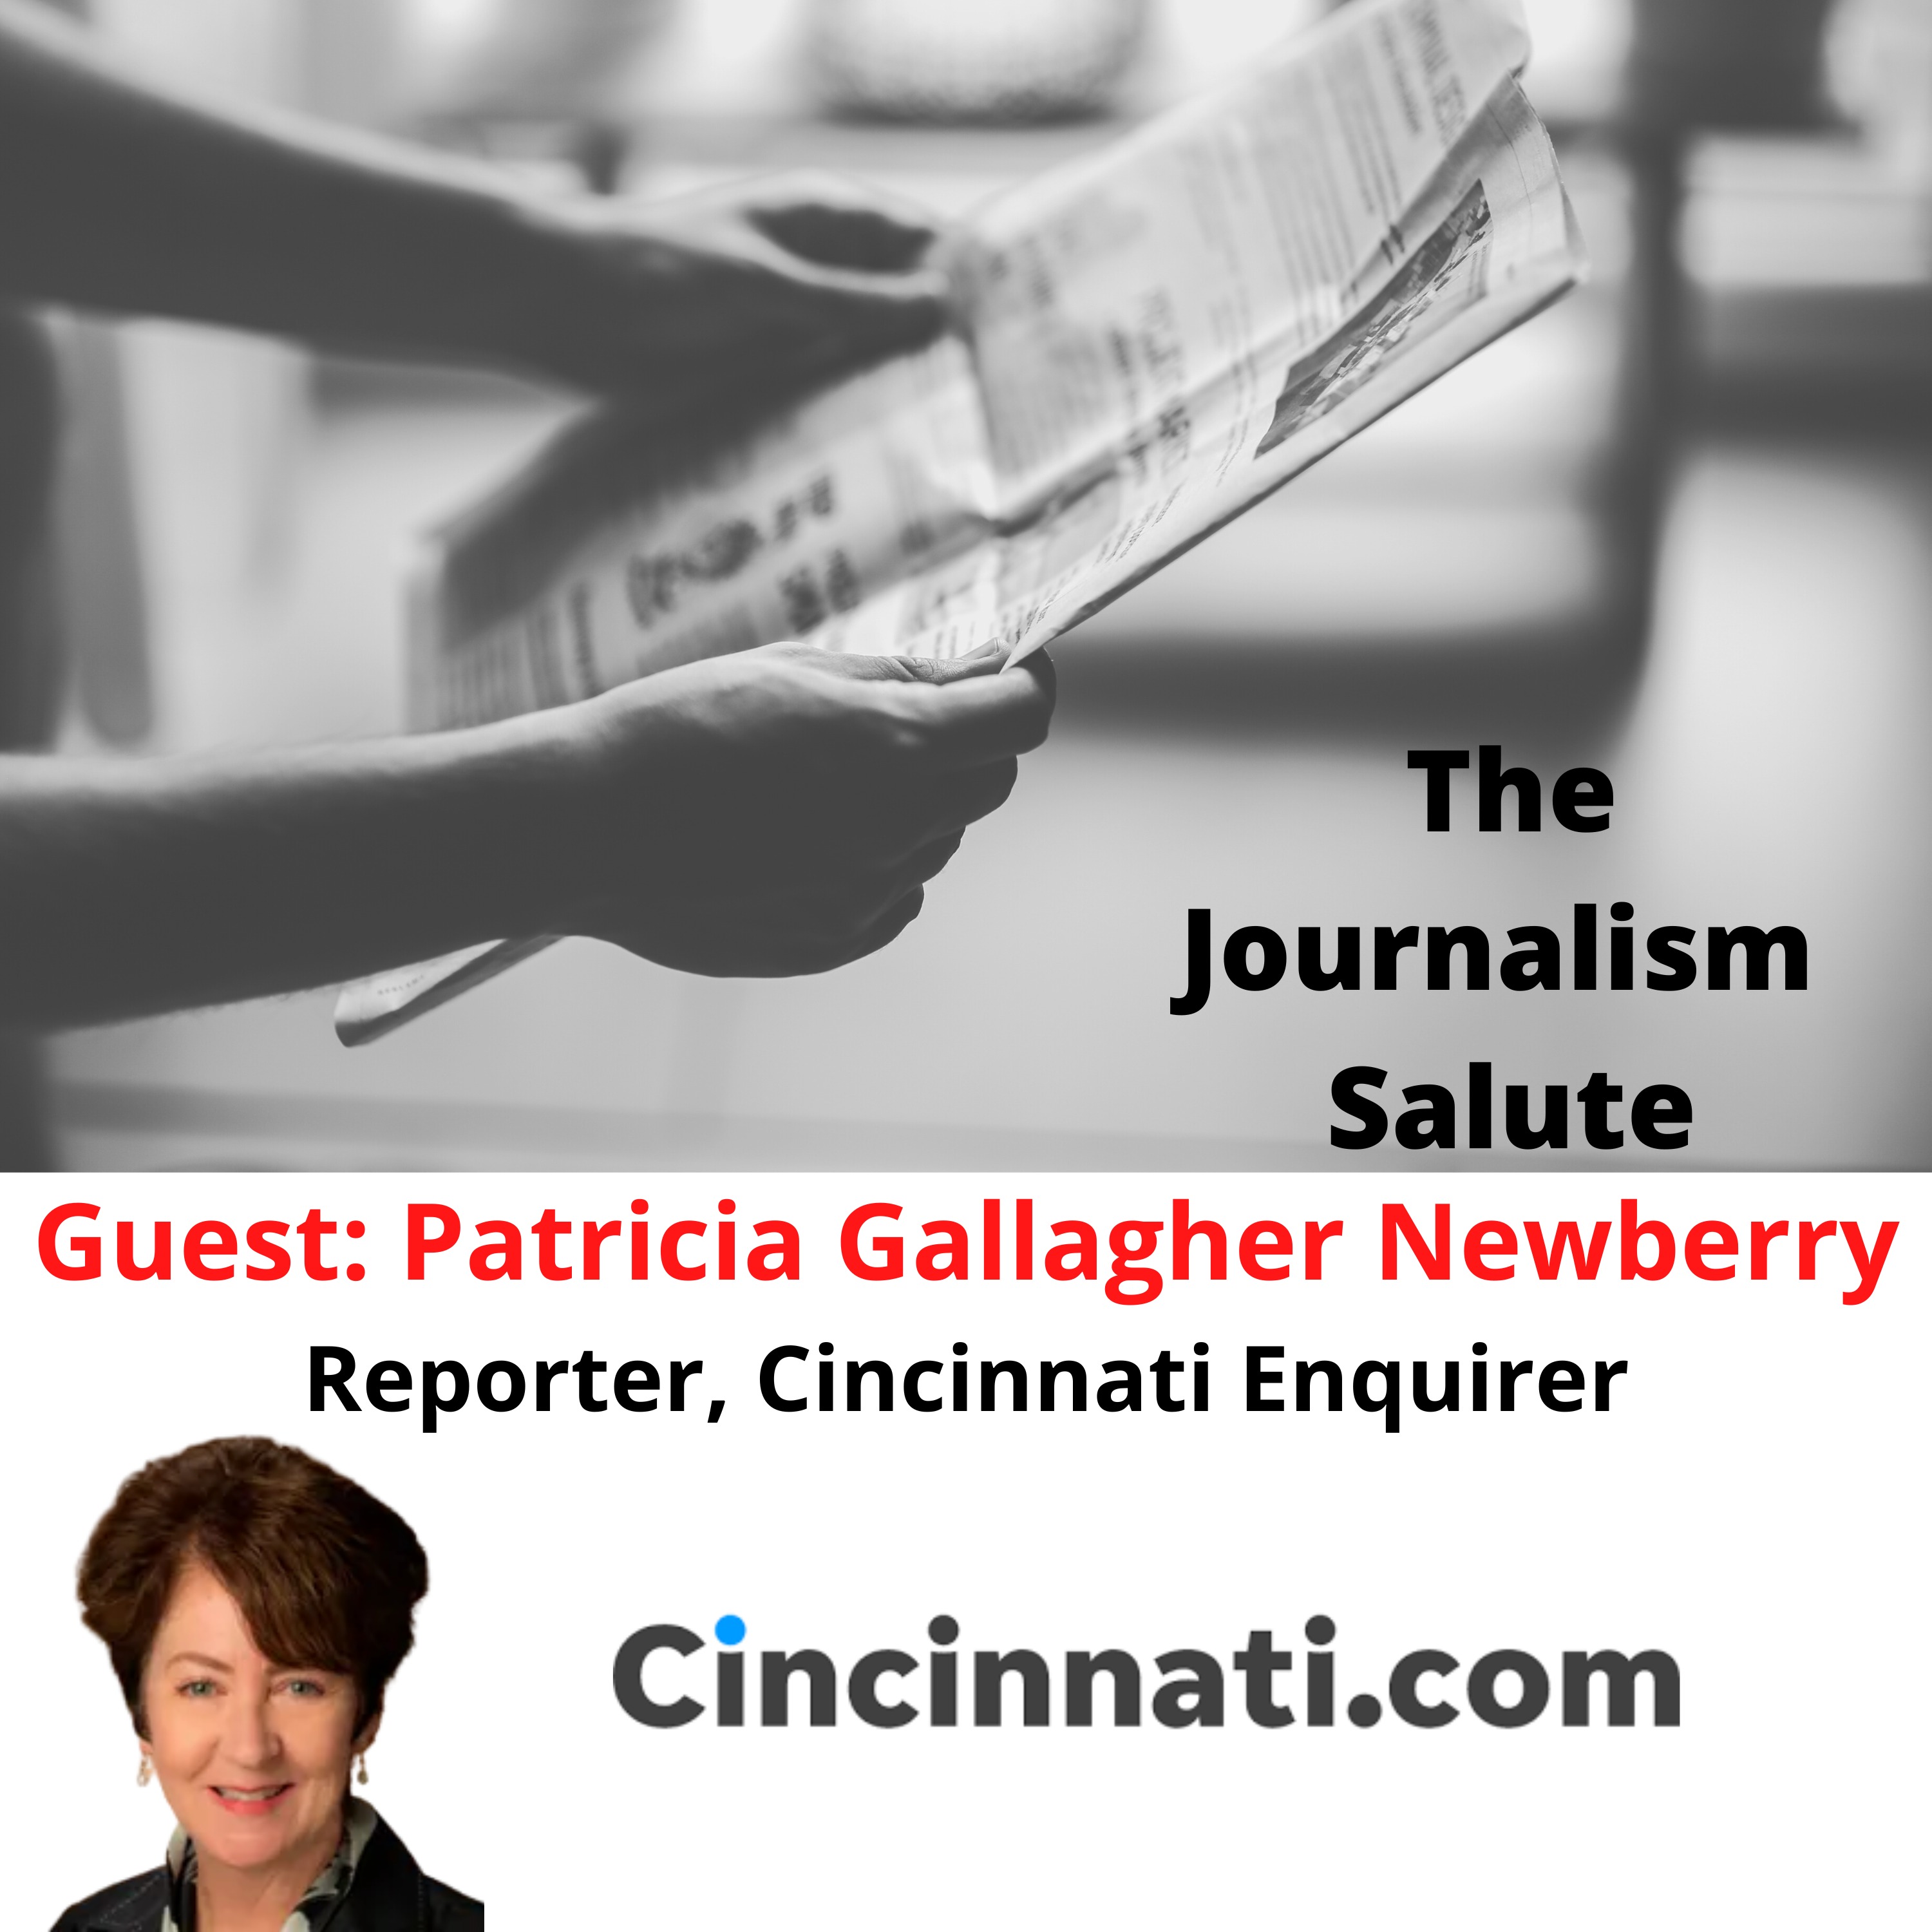 Patricia Gallagher Newberry, Enterprise & Watchdog Reporter, Cincinnati Enquirer